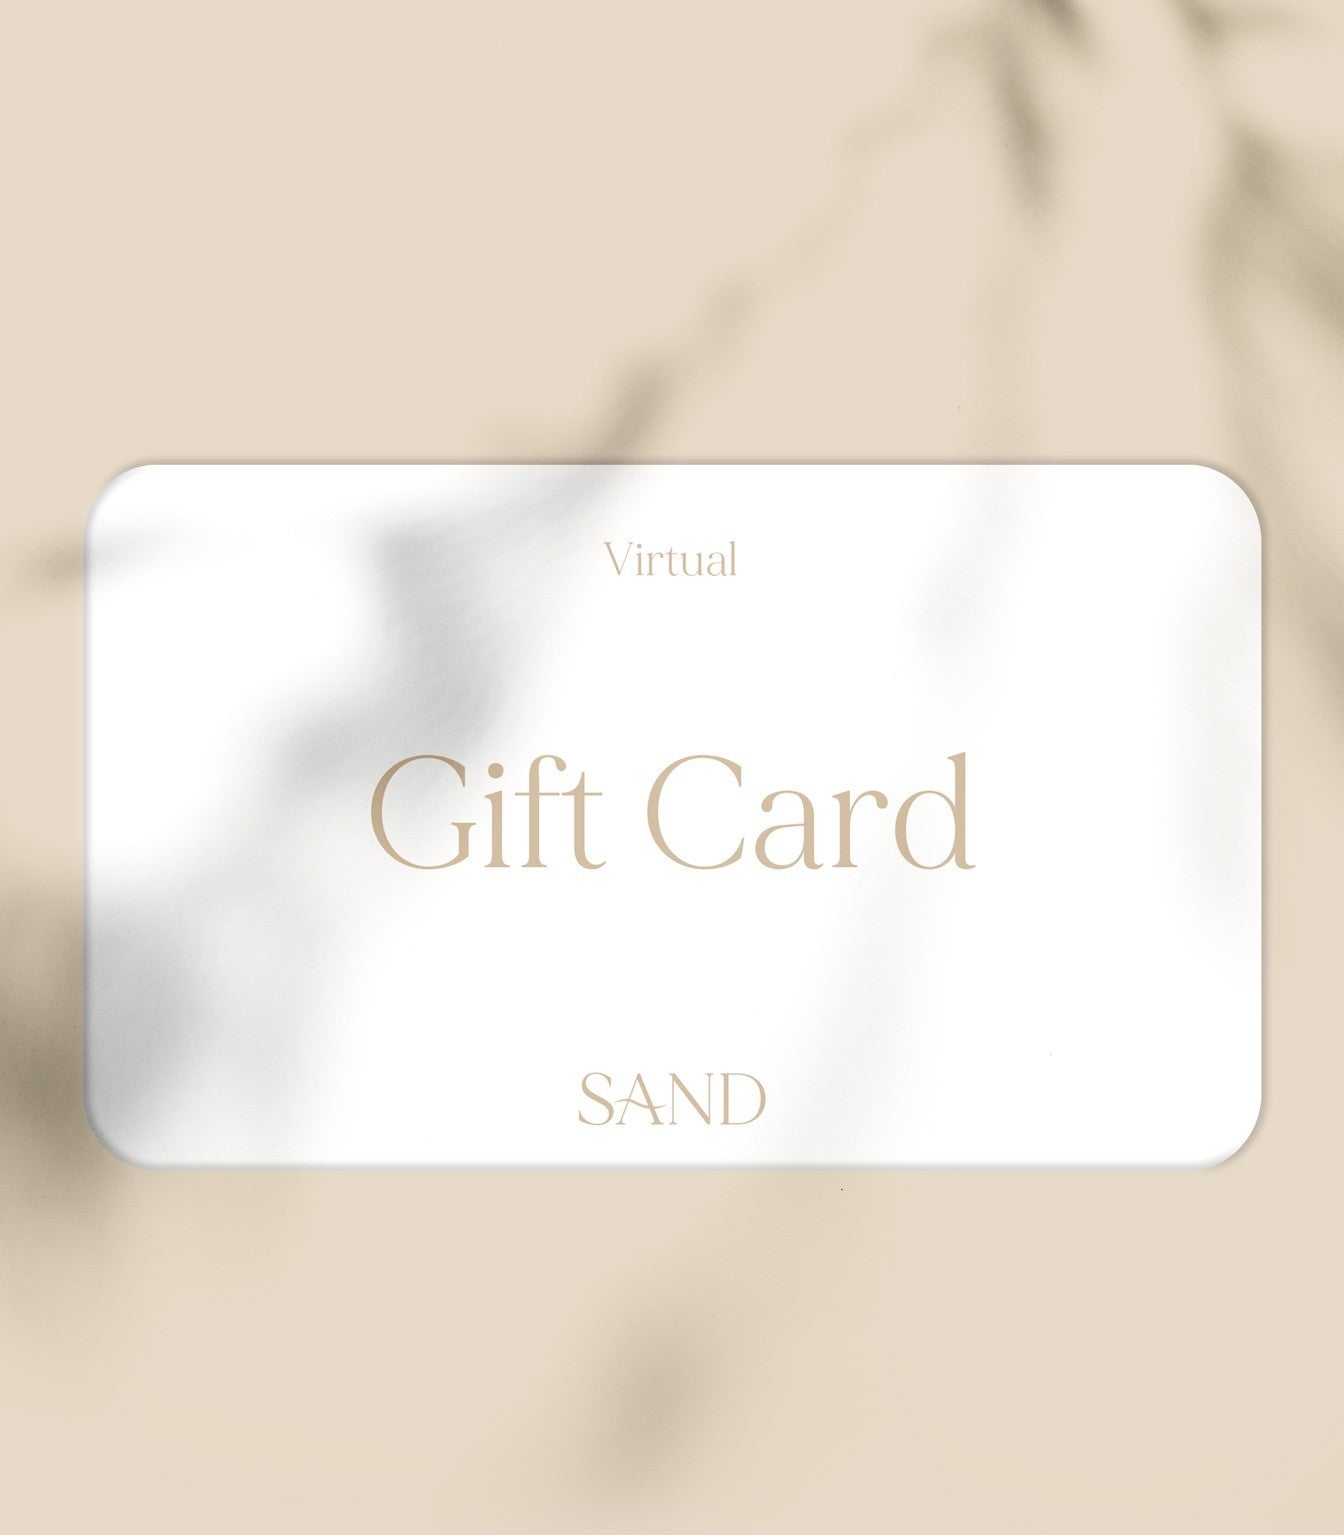 SAND VIRTUAL GIFT CARD